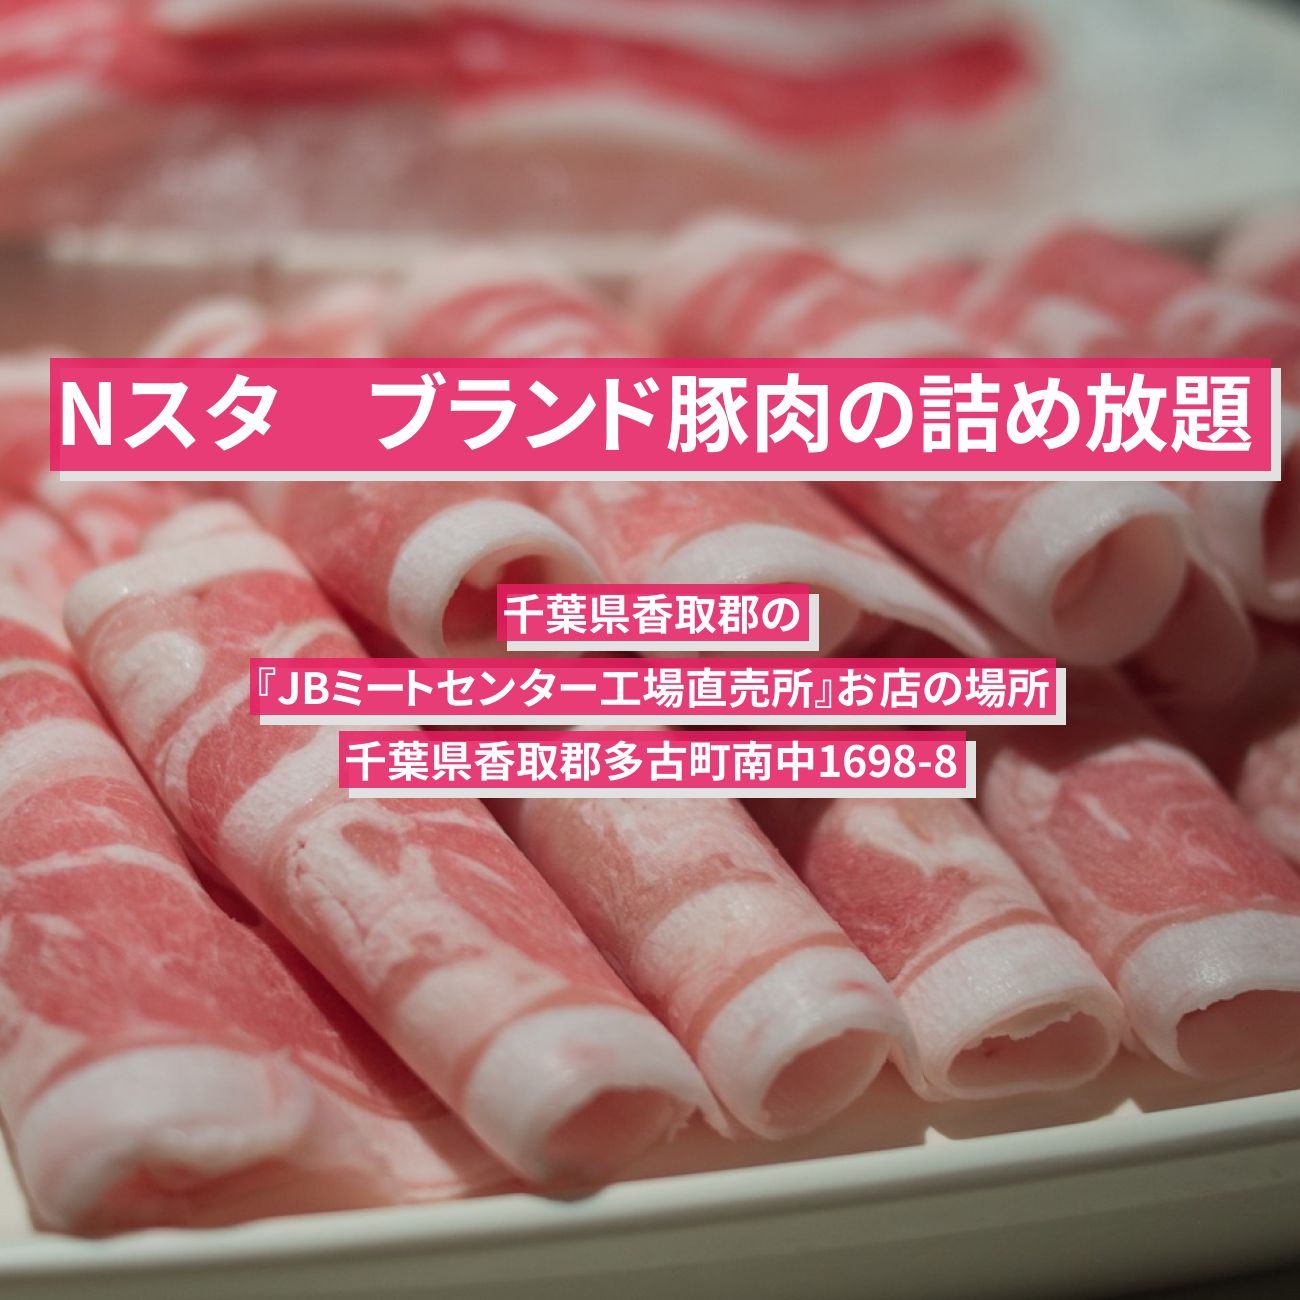 【Nスタ】豚肉の詰め放題『JBミートセンター工場直売所』千葉県香取郡のお店の場所